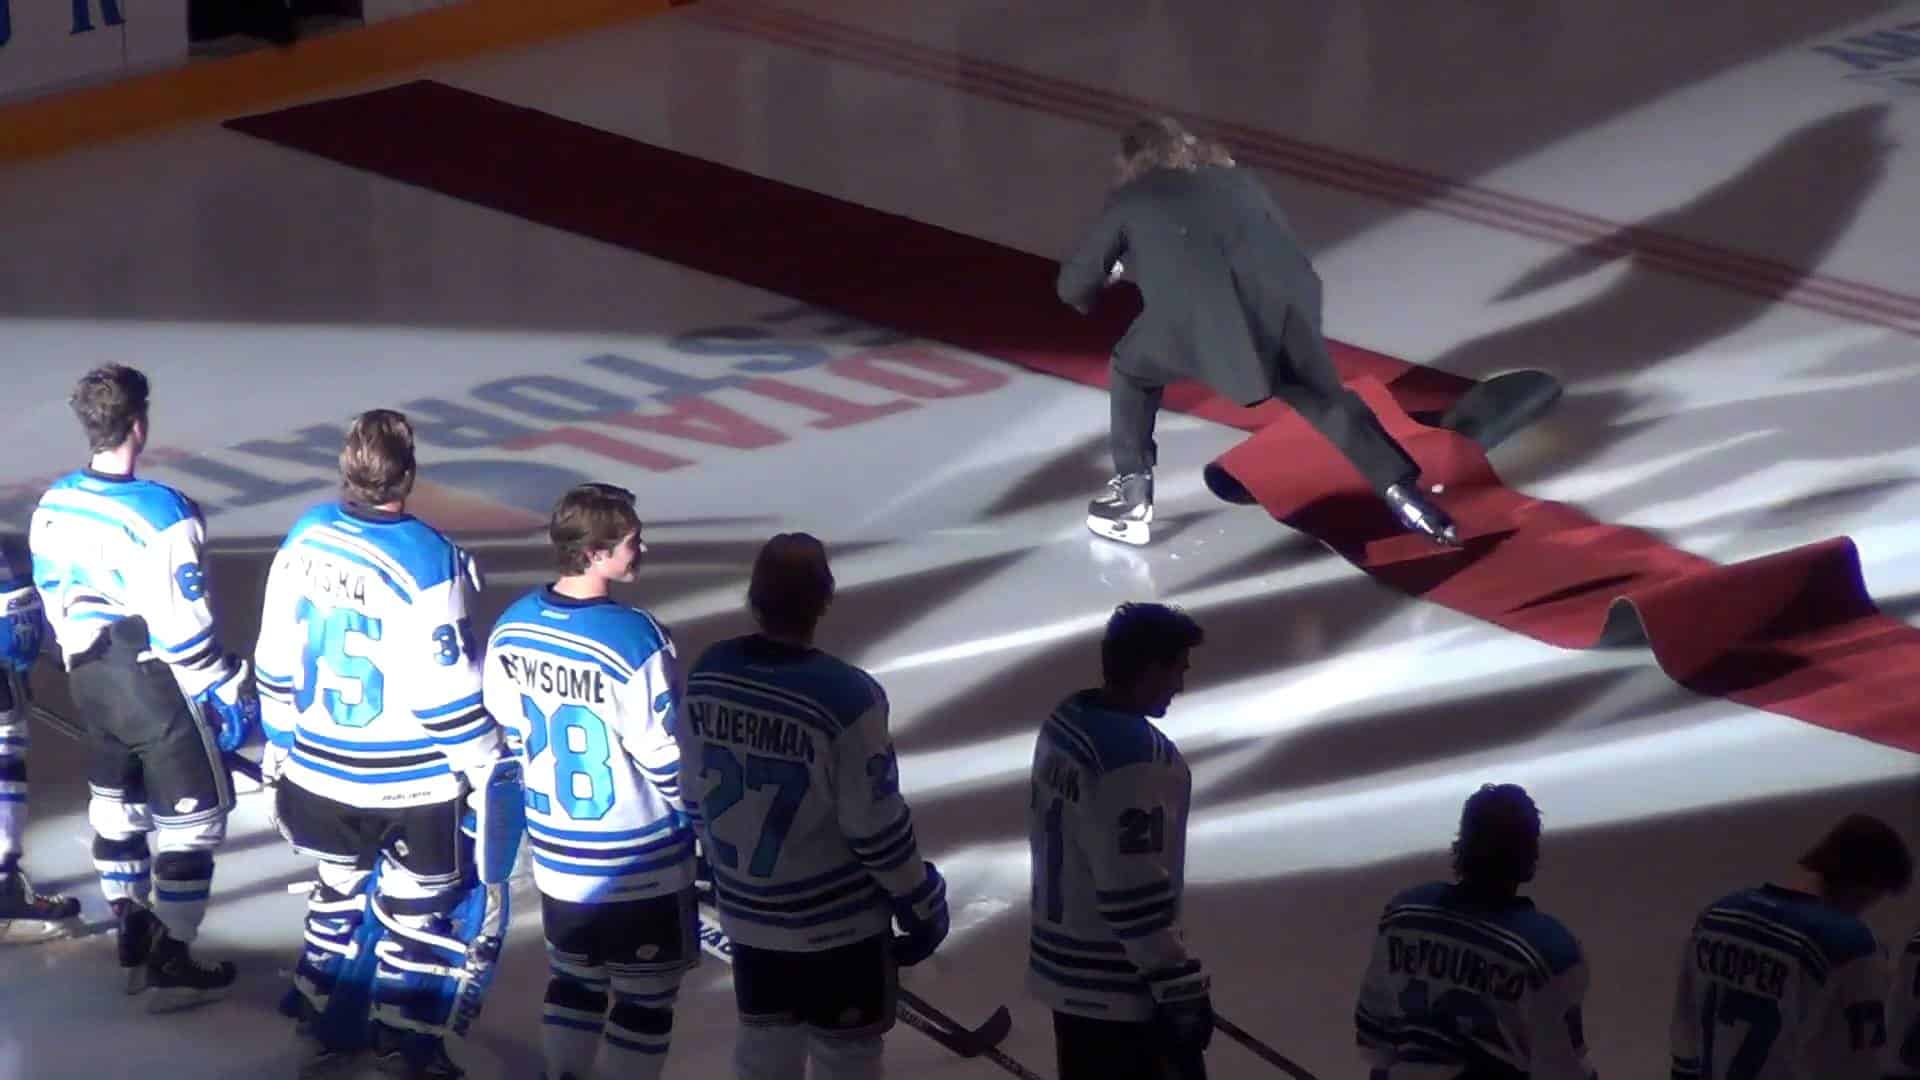 Slapstick ved en ishockeykamp: "Oh Canada" On Ice